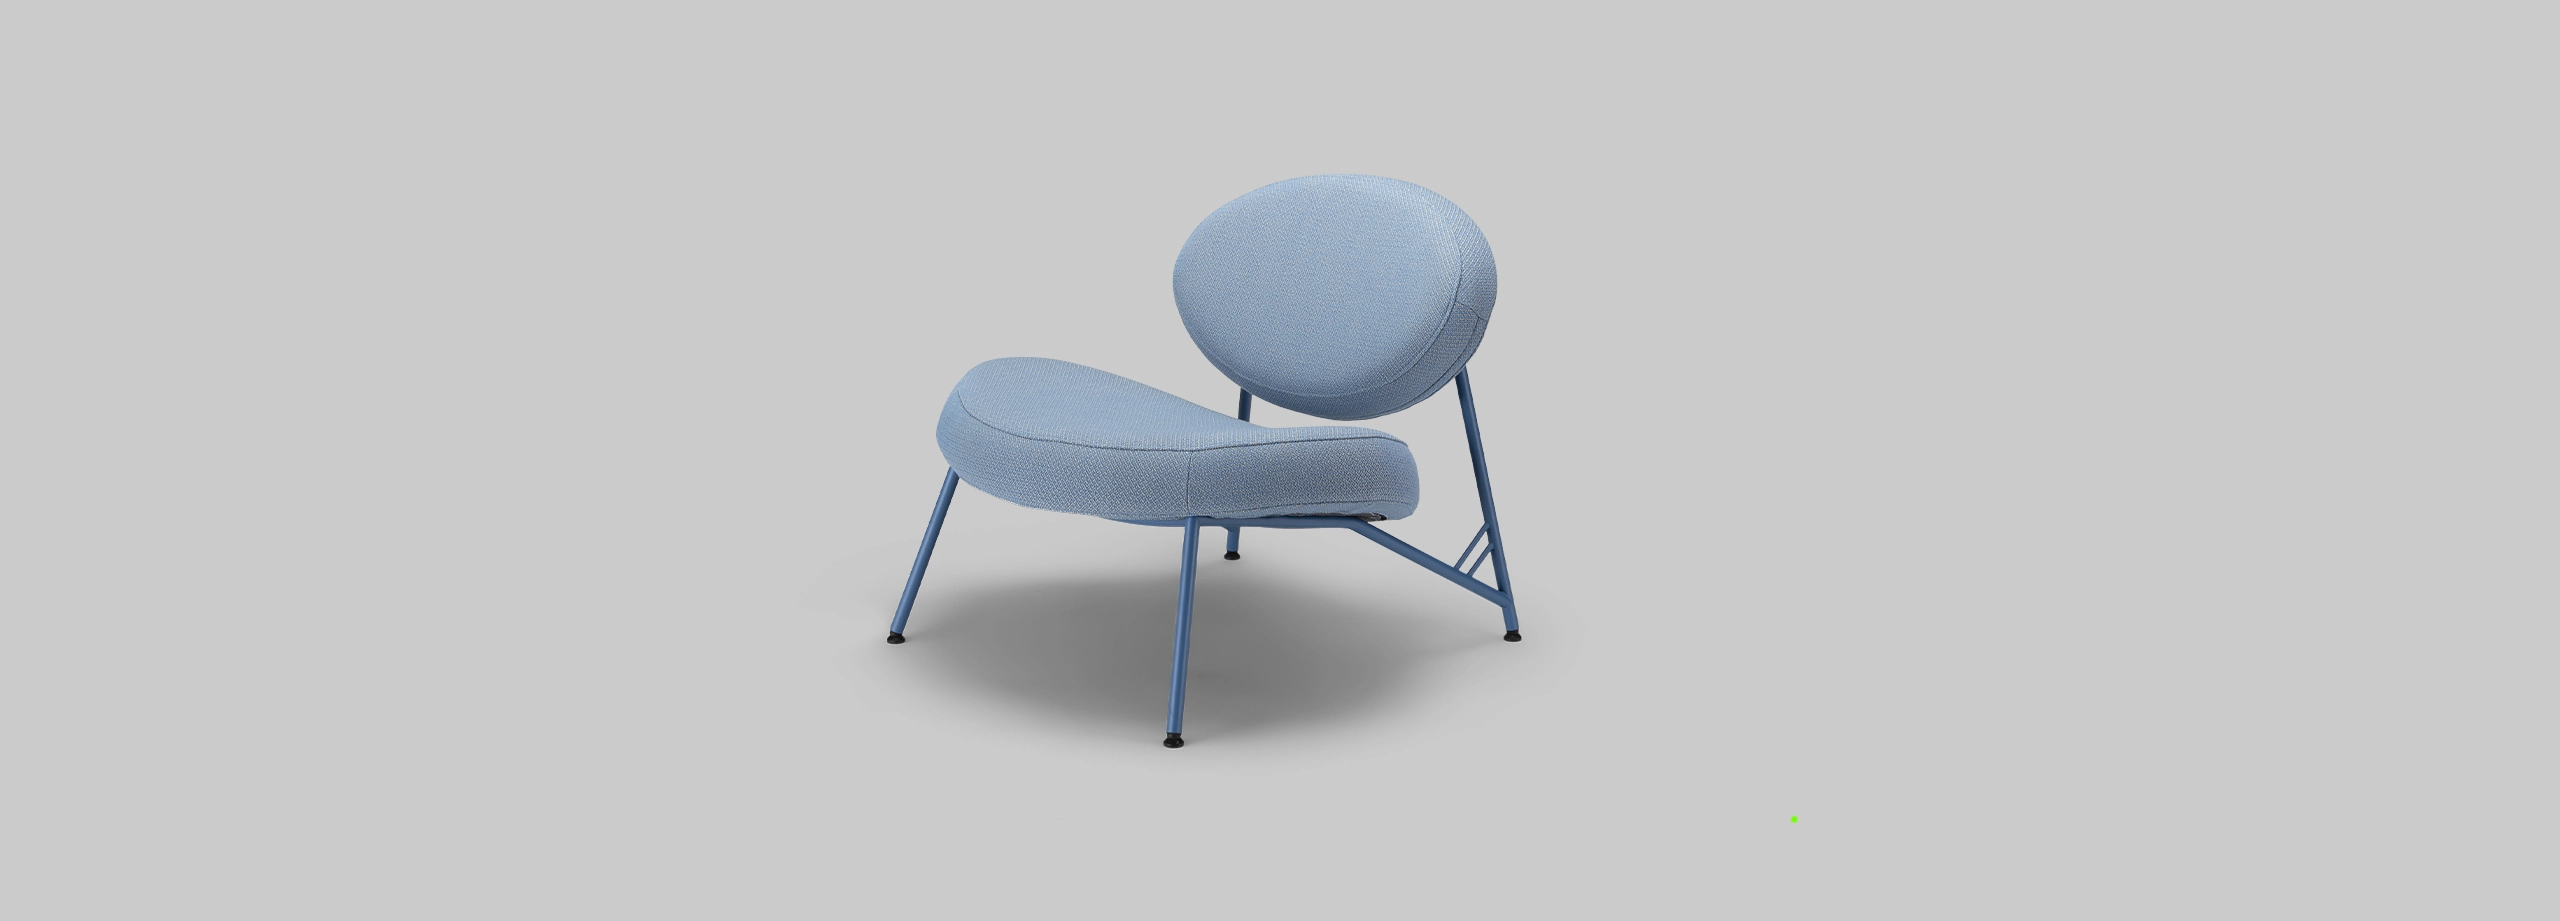 Harvink fauteuil Tipi in stof Cleo blauw met frame RAL 5007 briljant blauw